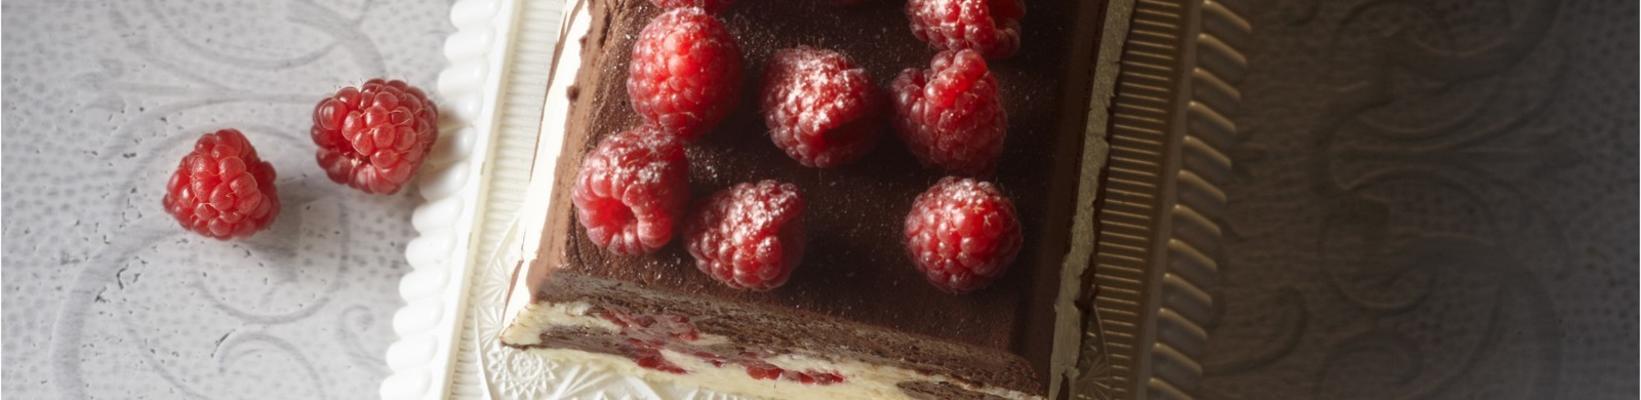 chocolate terrine with raspberries